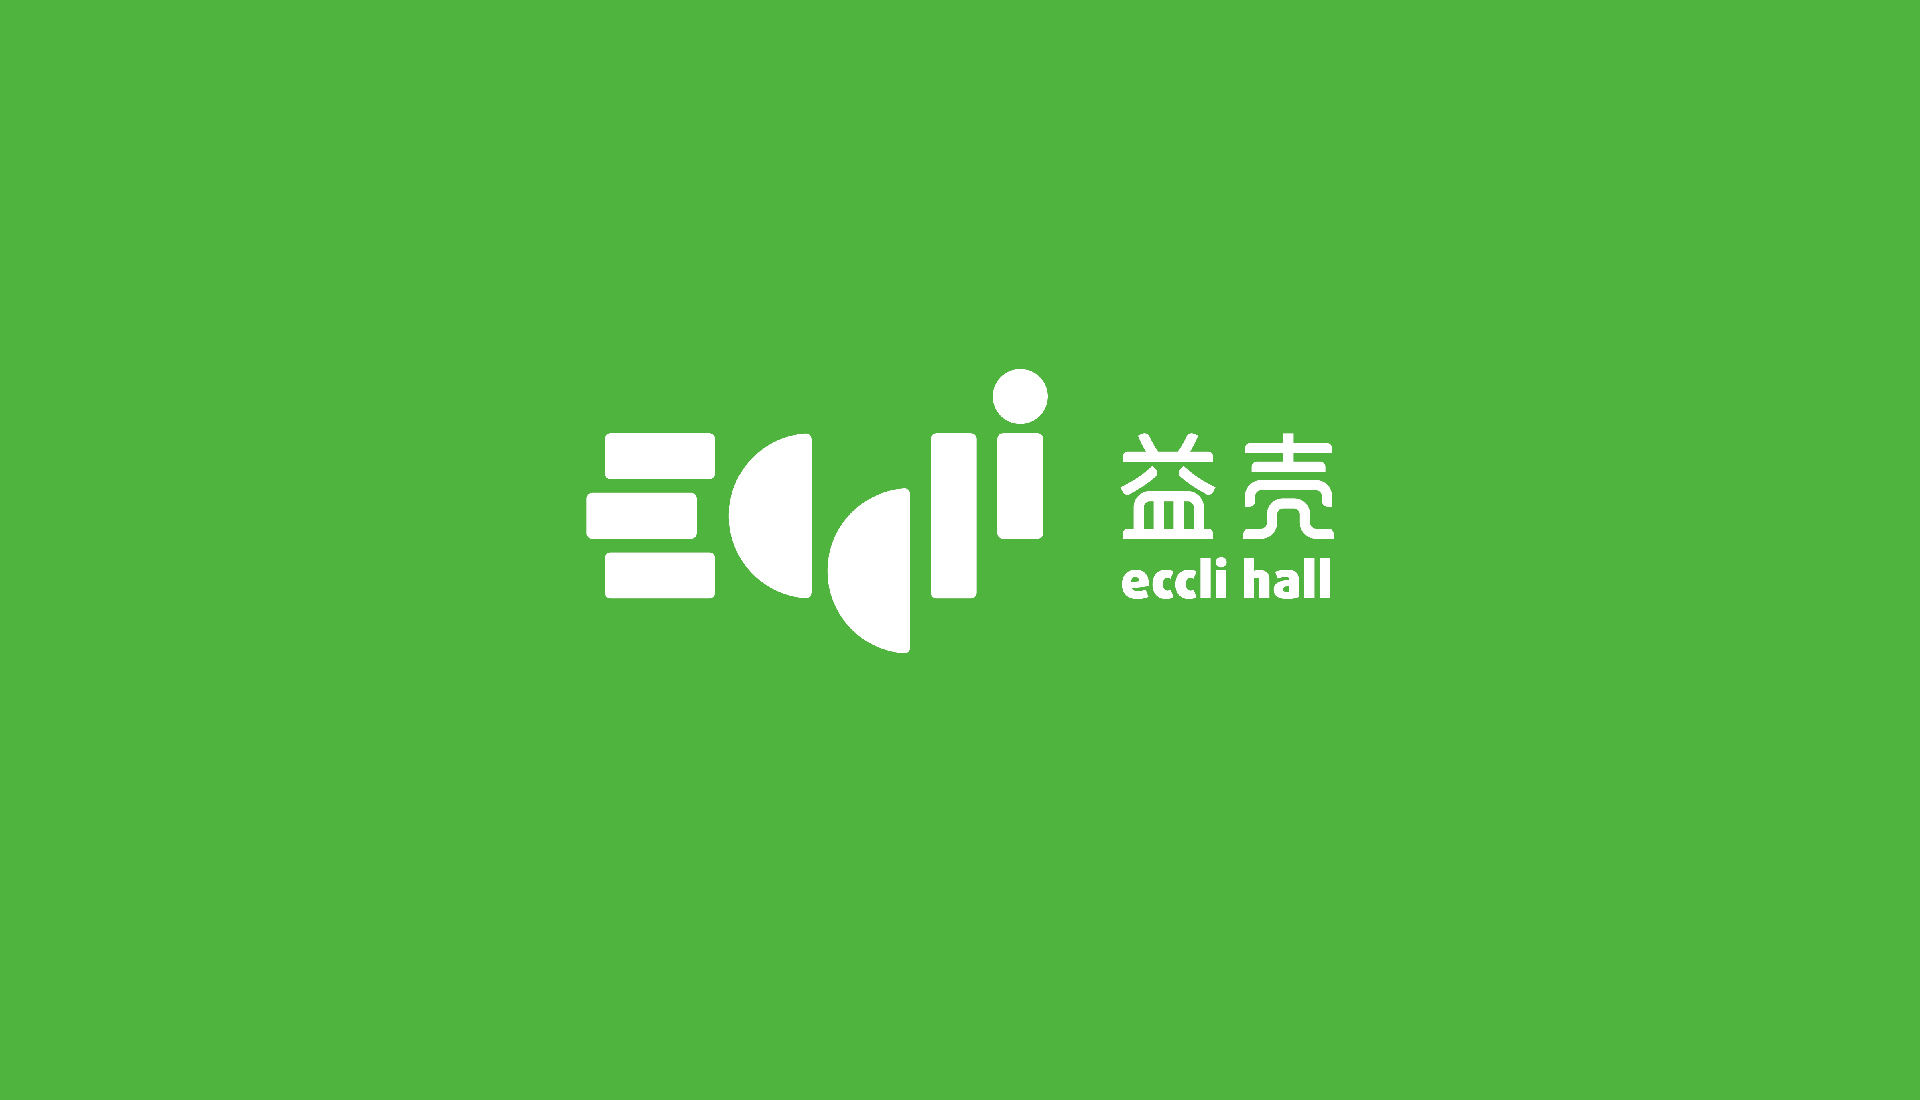 ECCLI HALL